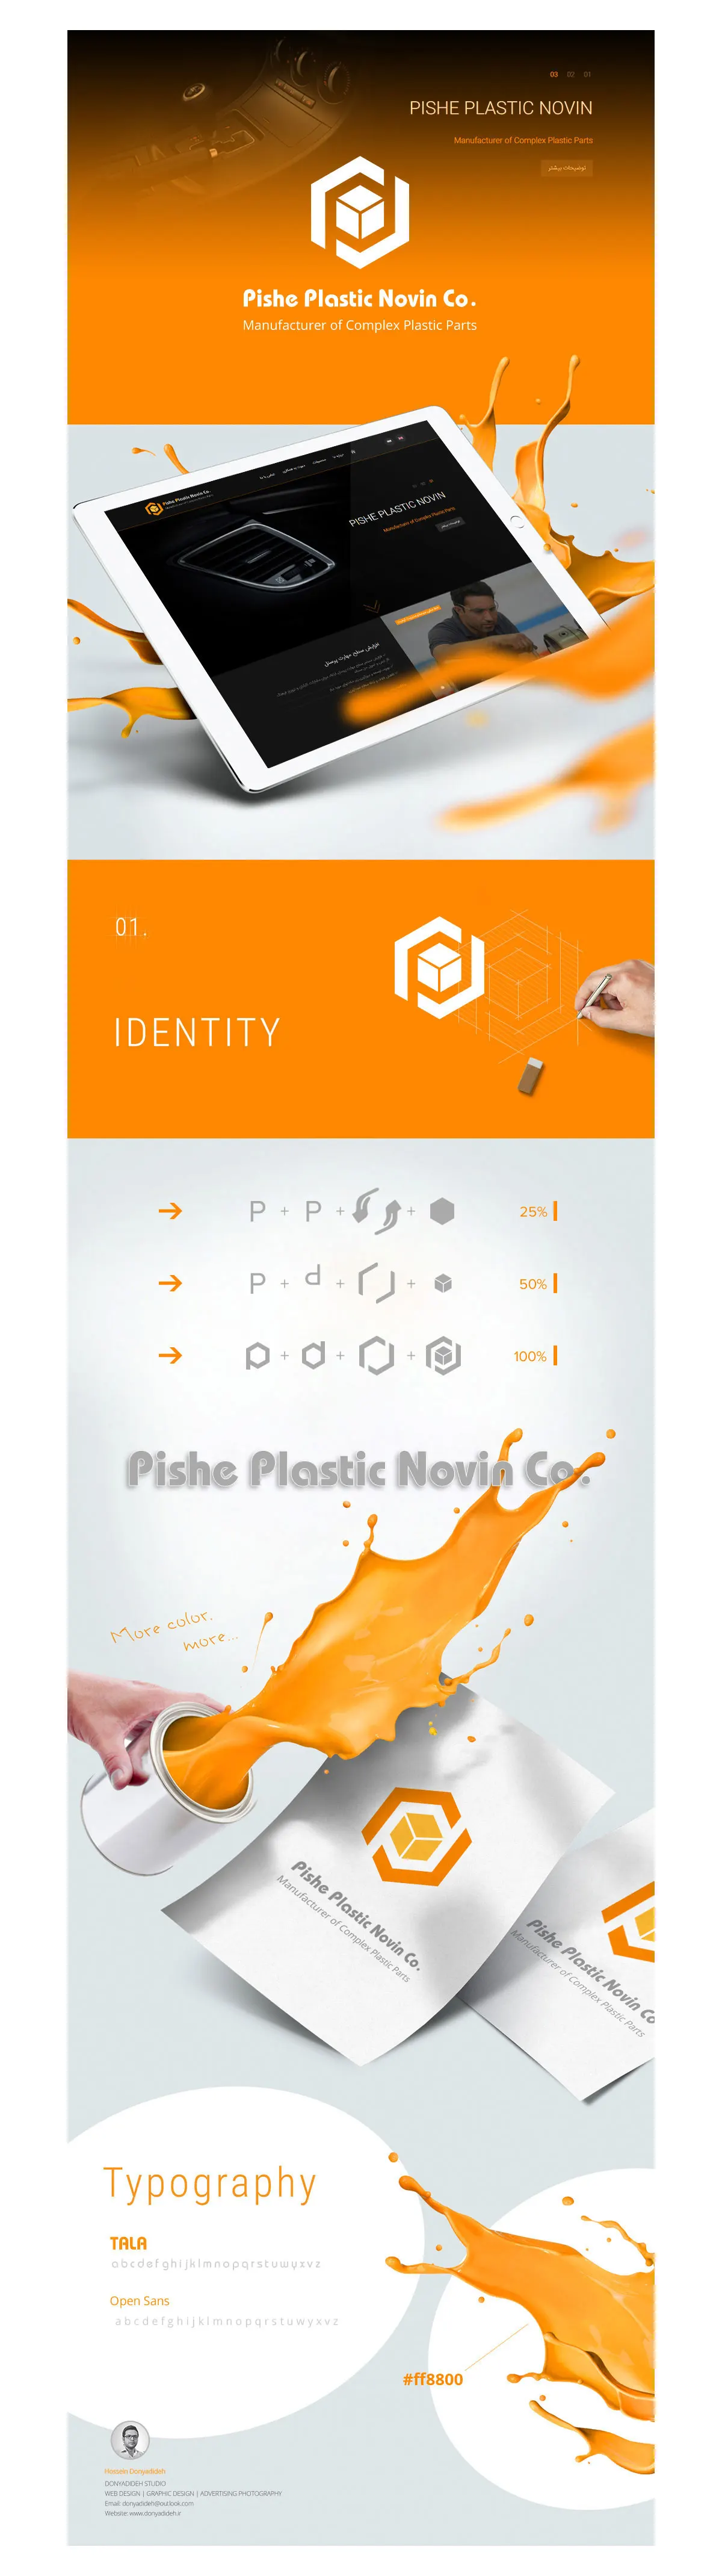 Pishe Plastic Novin logo design | Hossein Donyadideh